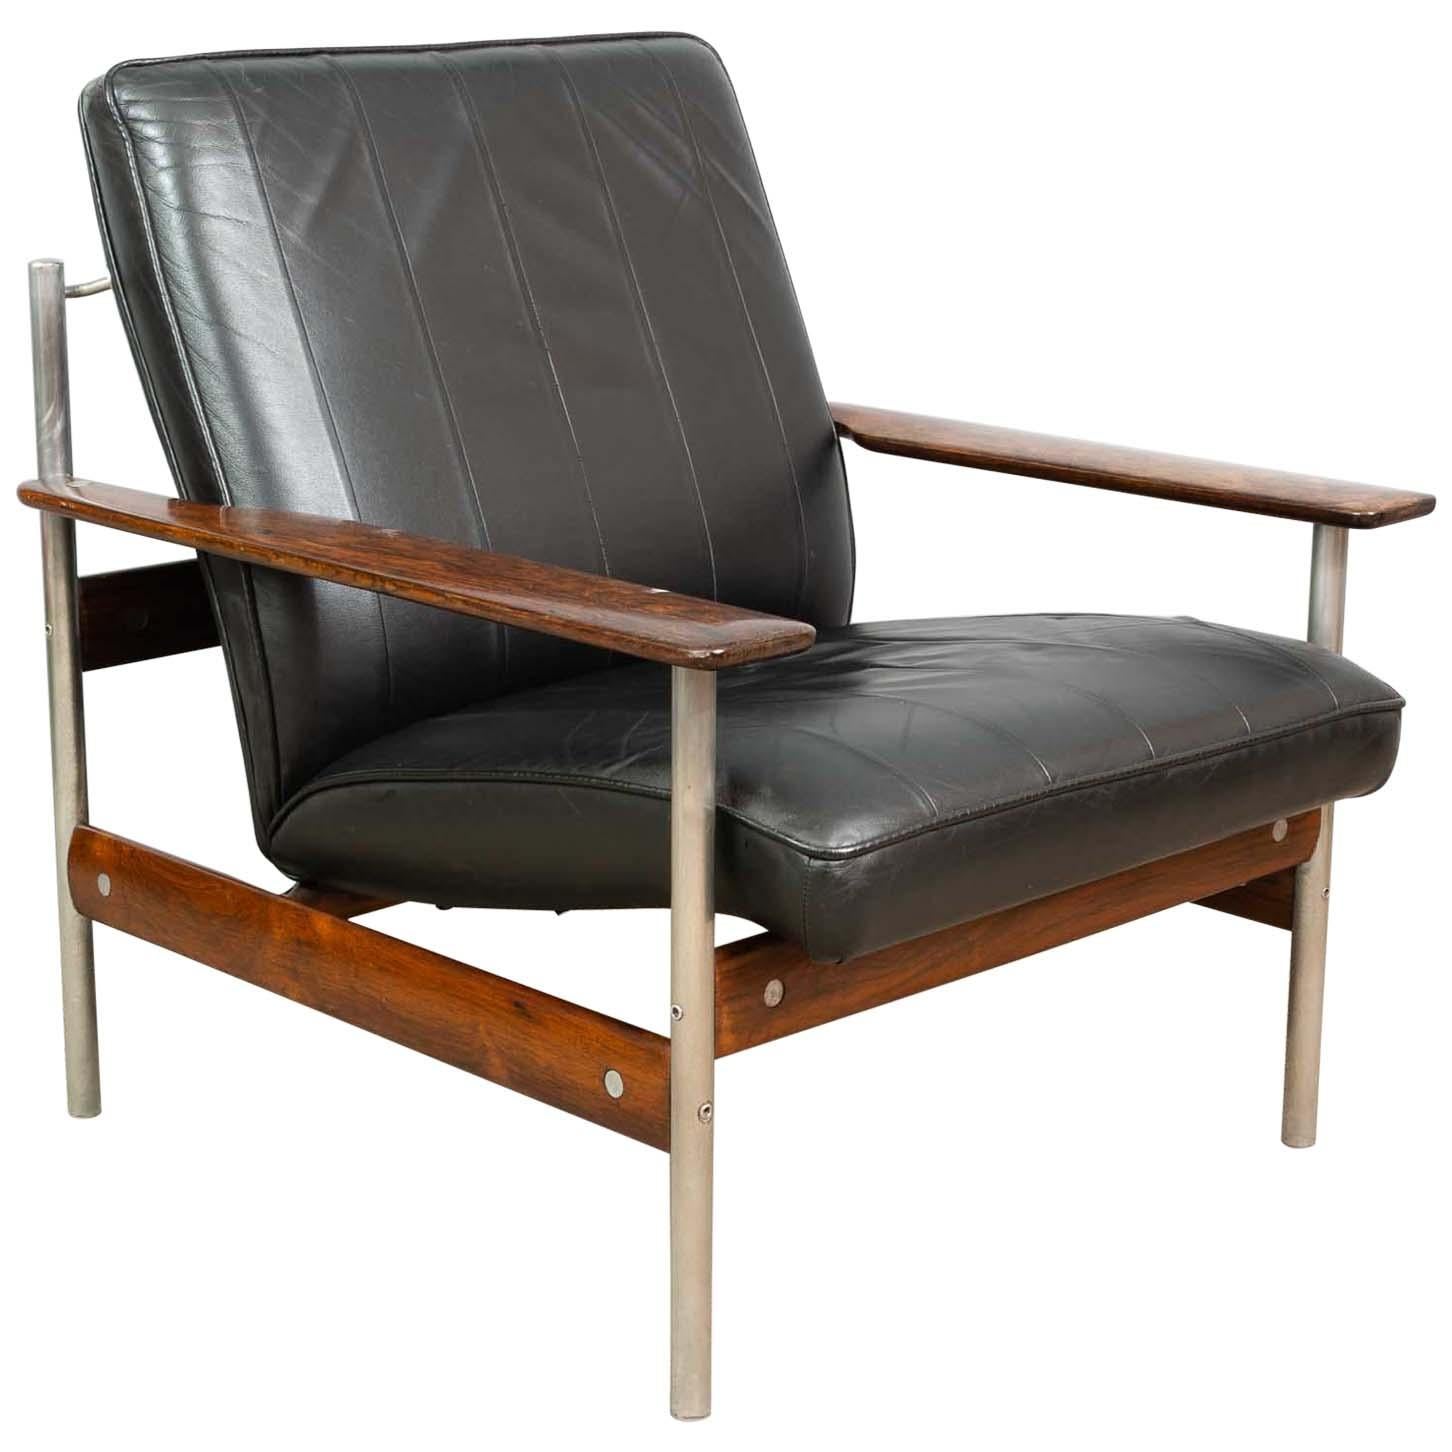 1960s Norwegian Leather Rosewood Lounge Chair Sven Ivar Dysthe for Dokka Mobler